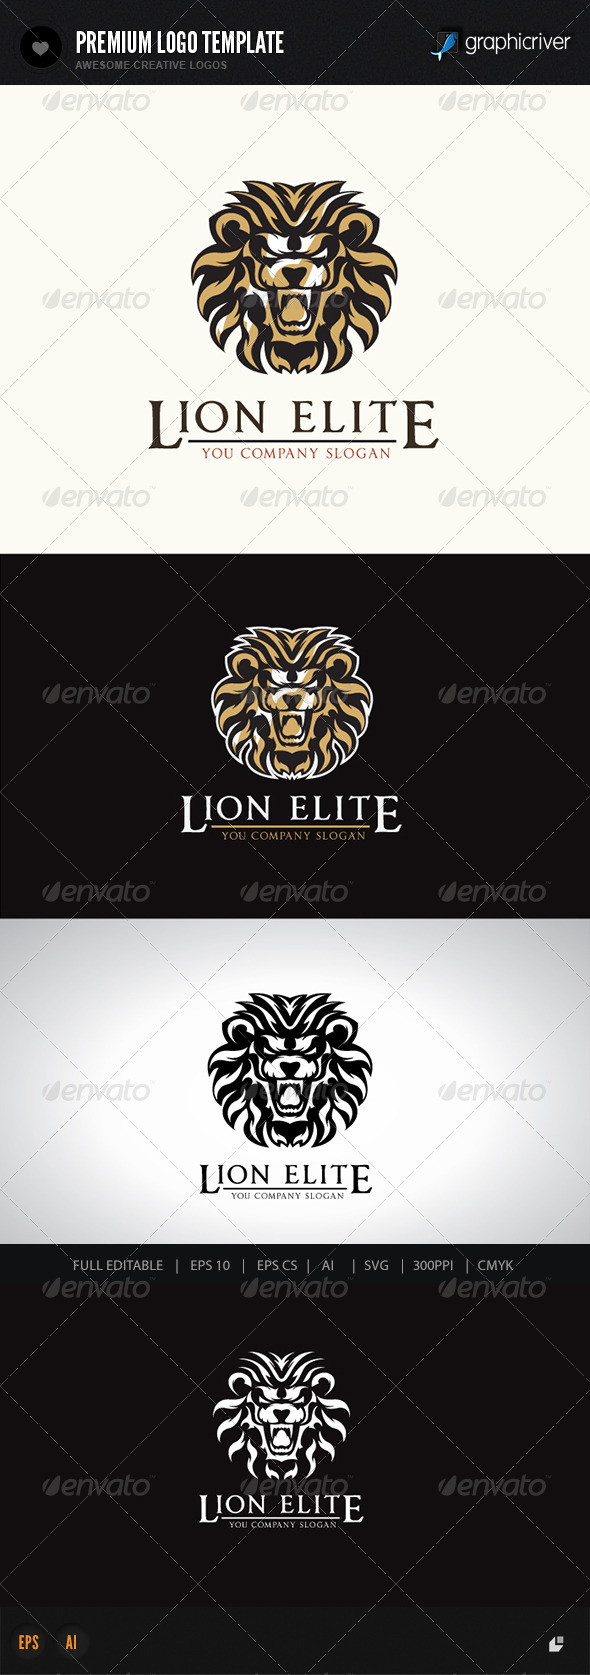 GraphicRiver Lion Elite 7639480